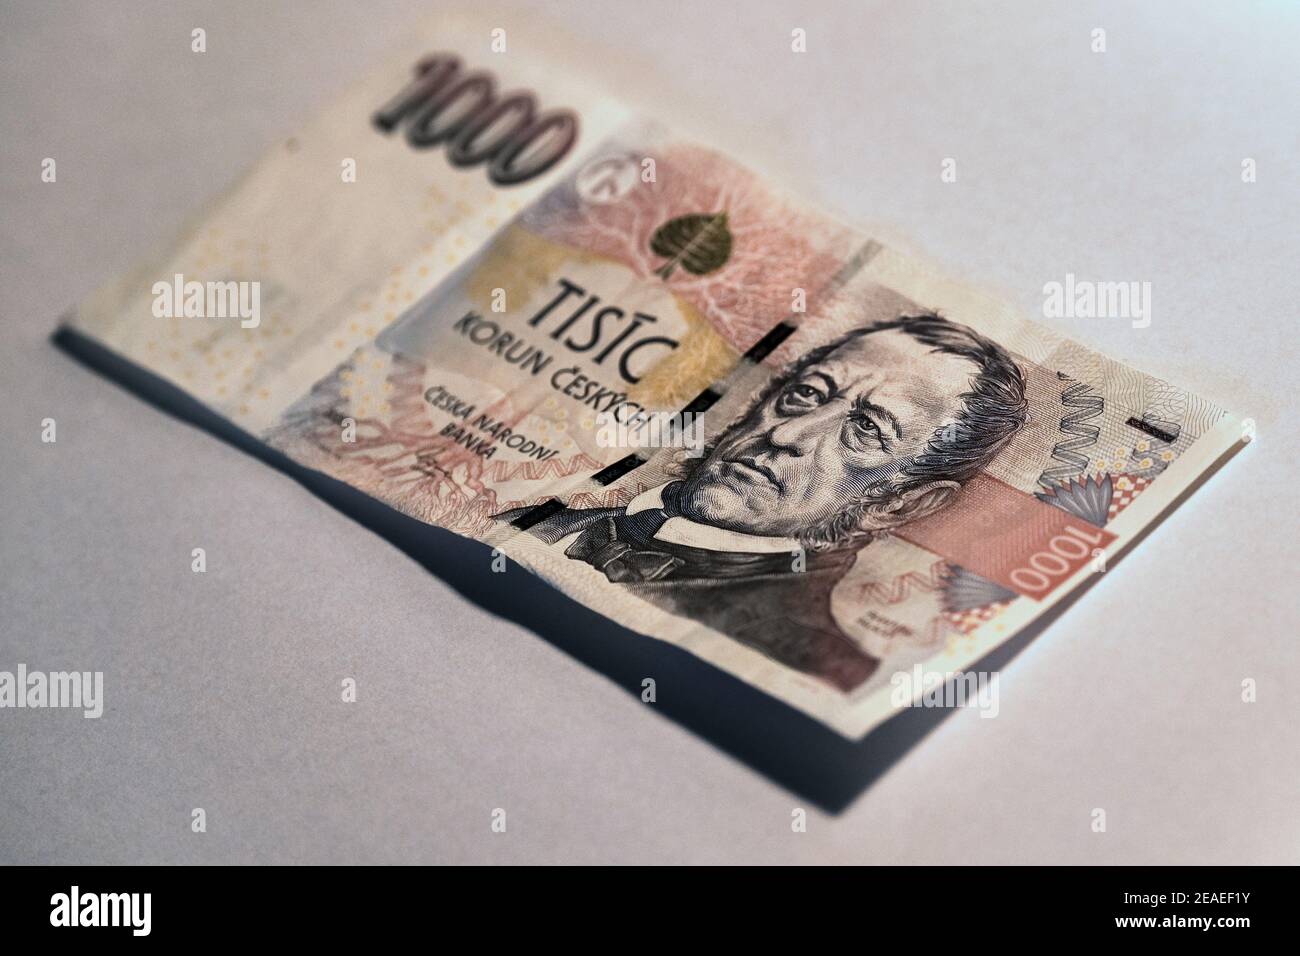 czech crown ceska koruna national money in czech republic Stock Photo